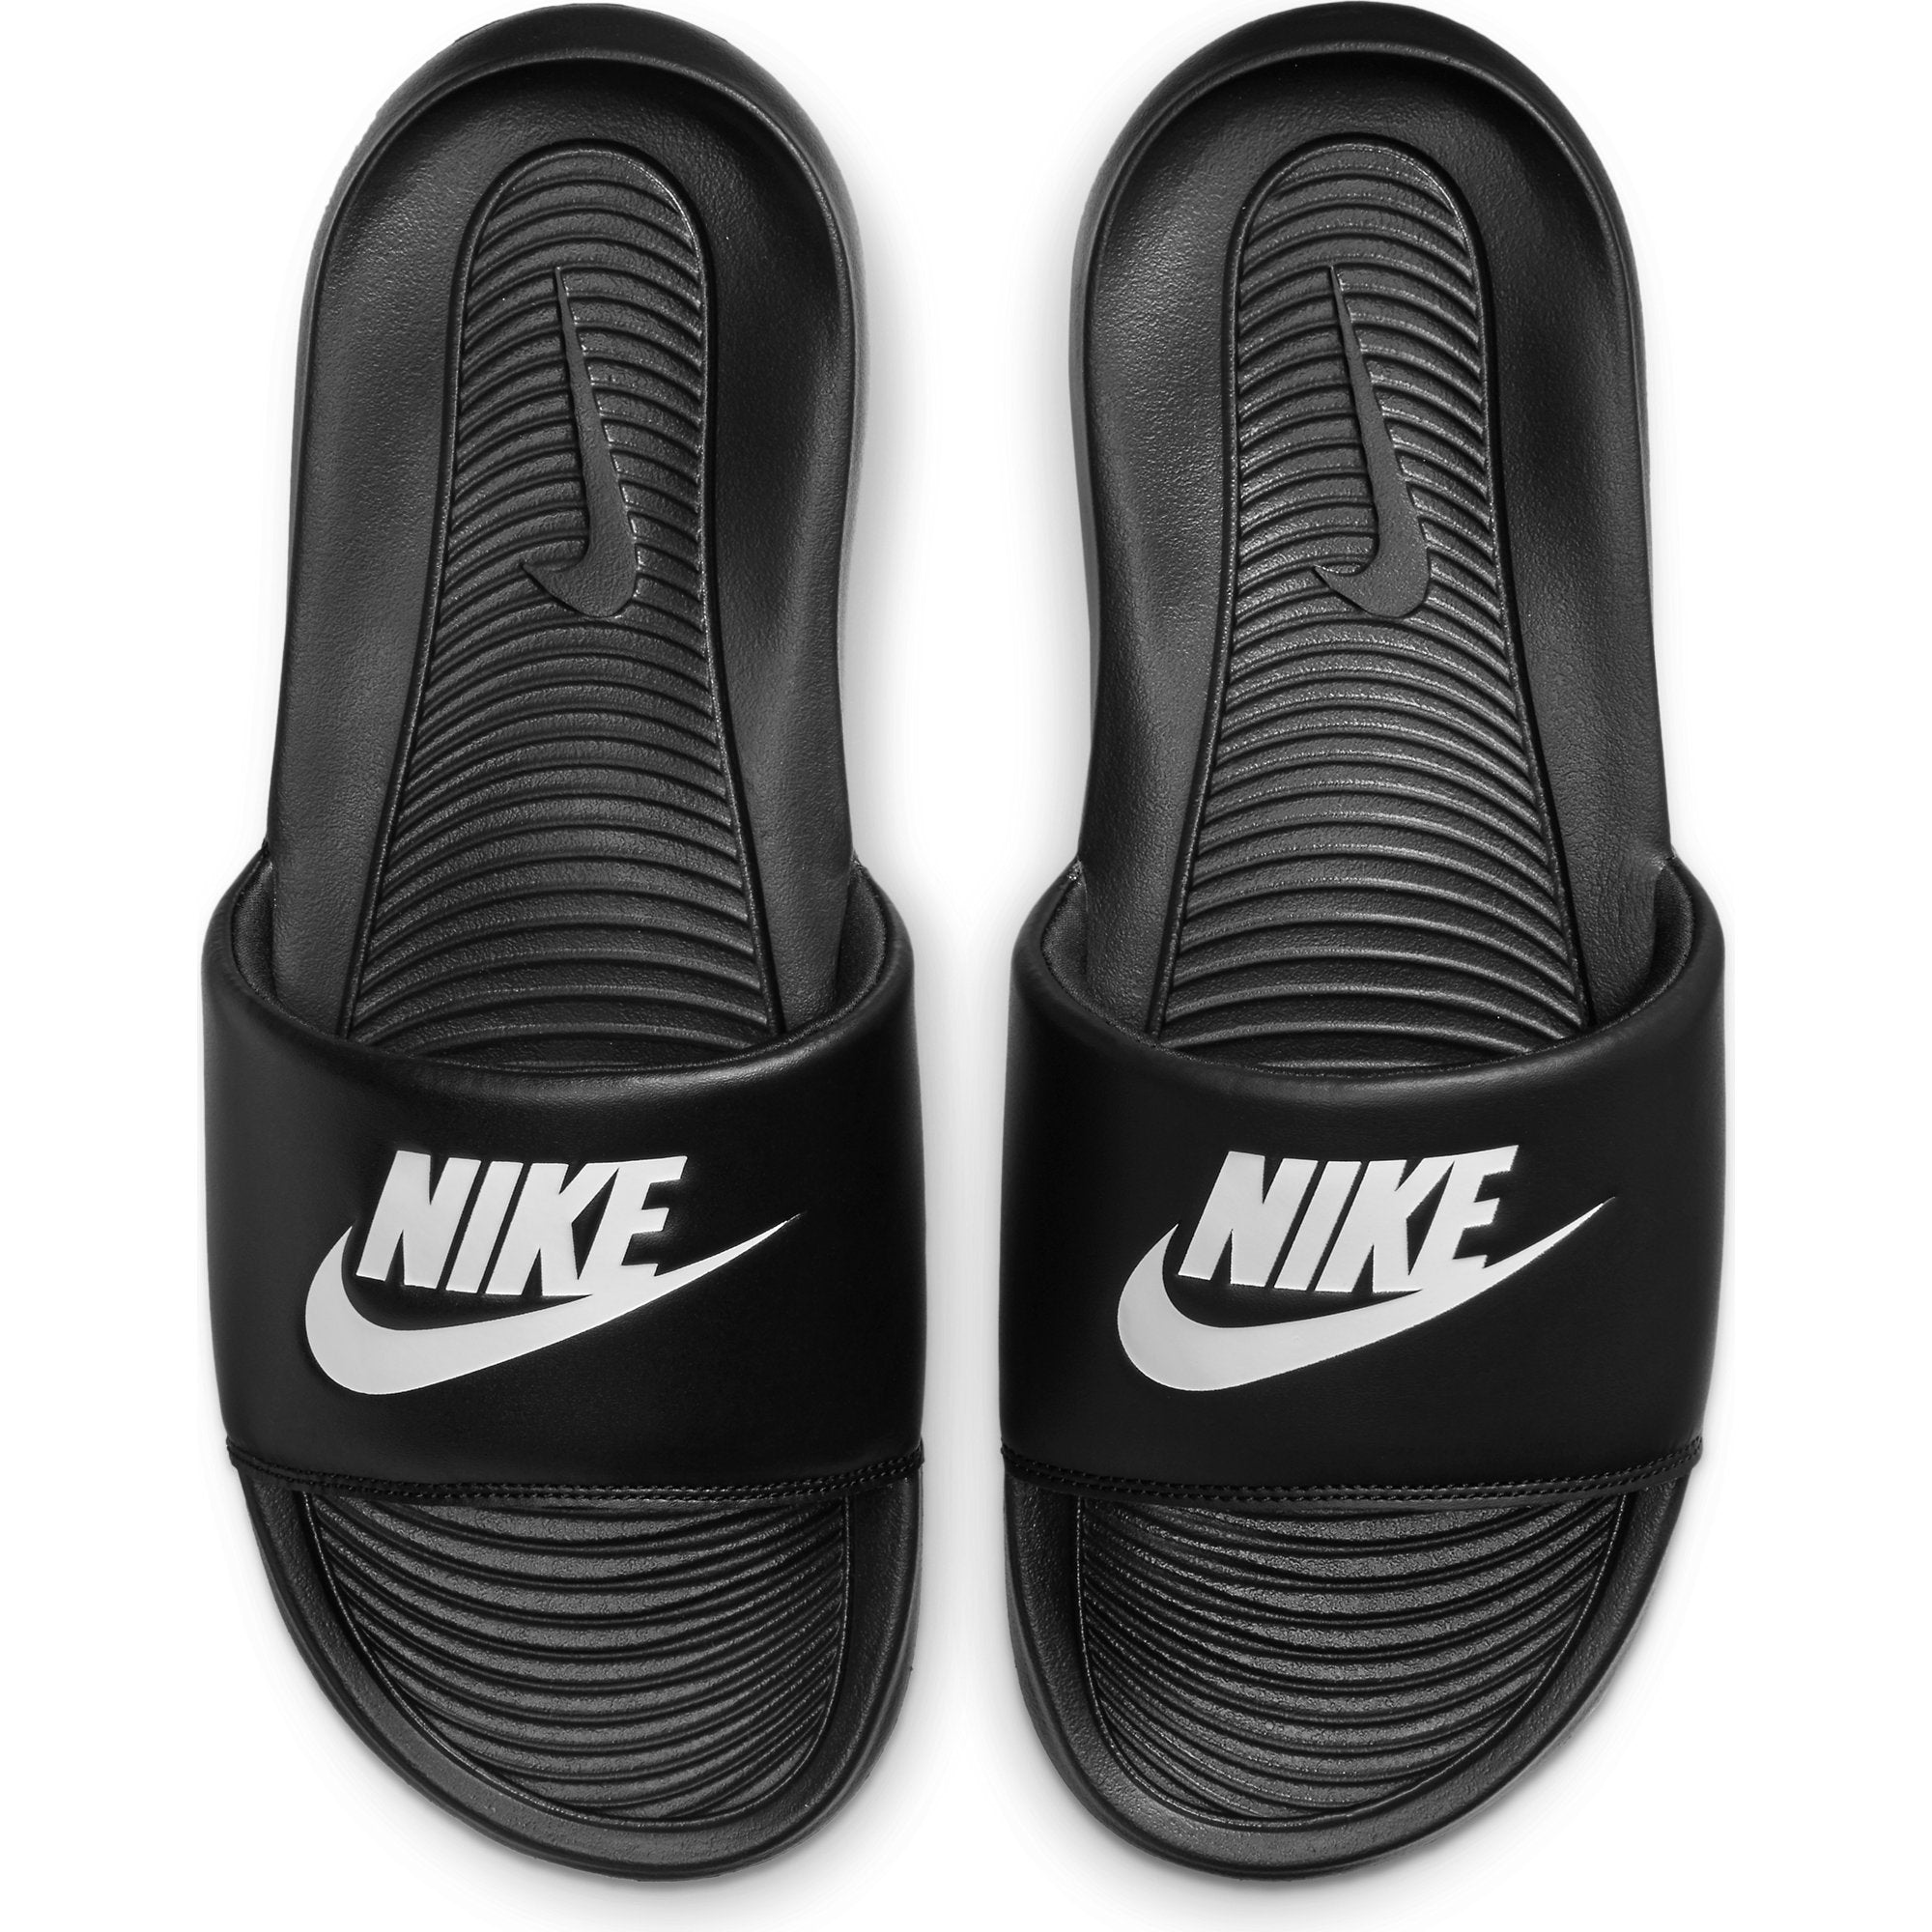 Nike One de Hombre color Negro -